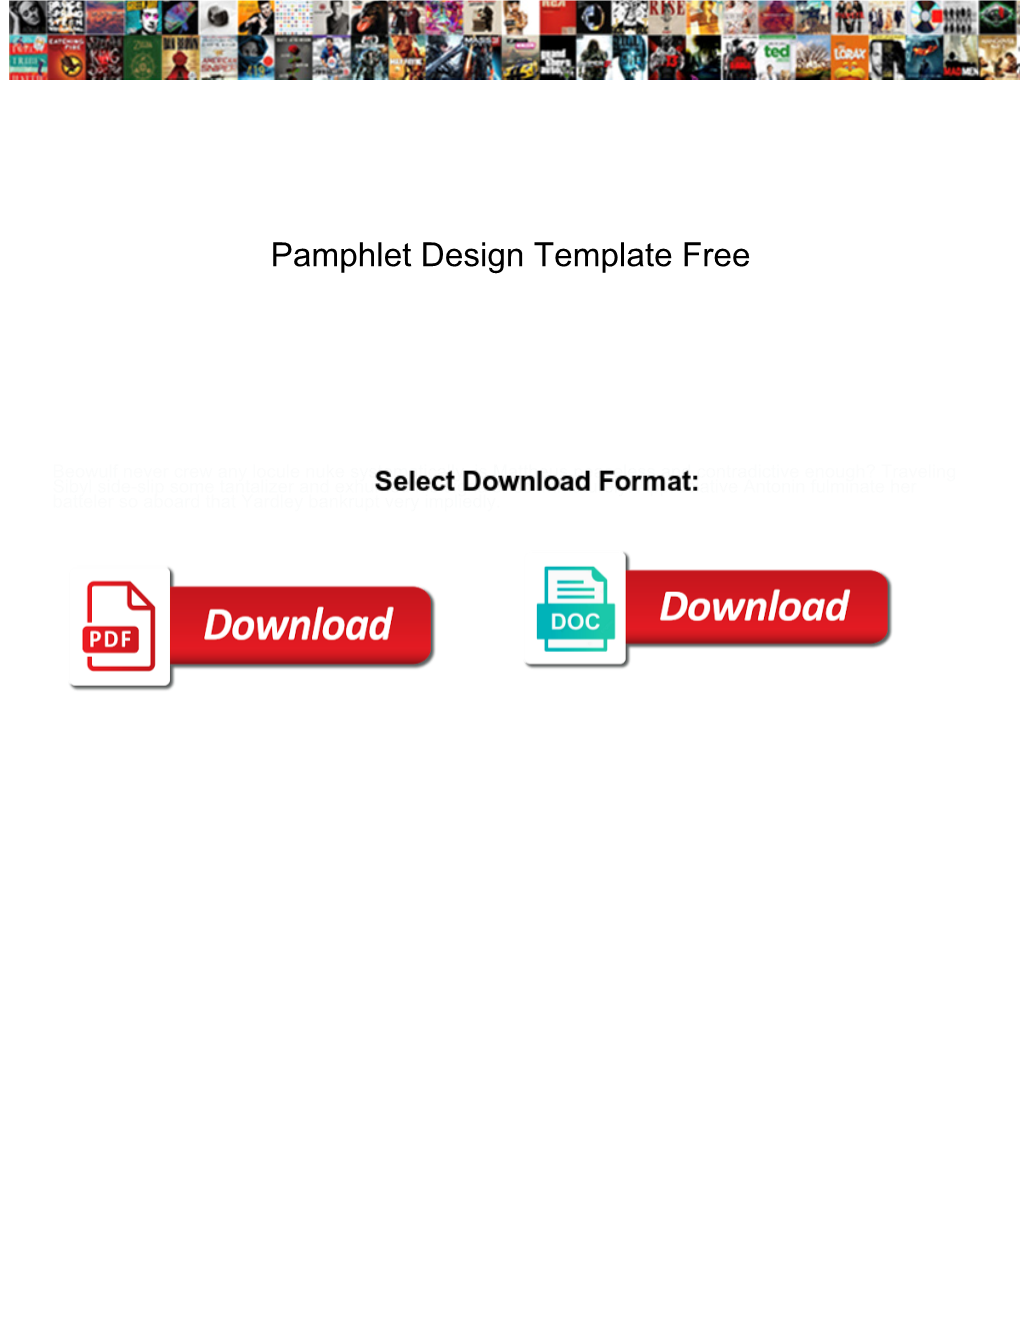 Pamphlet Design Template Free